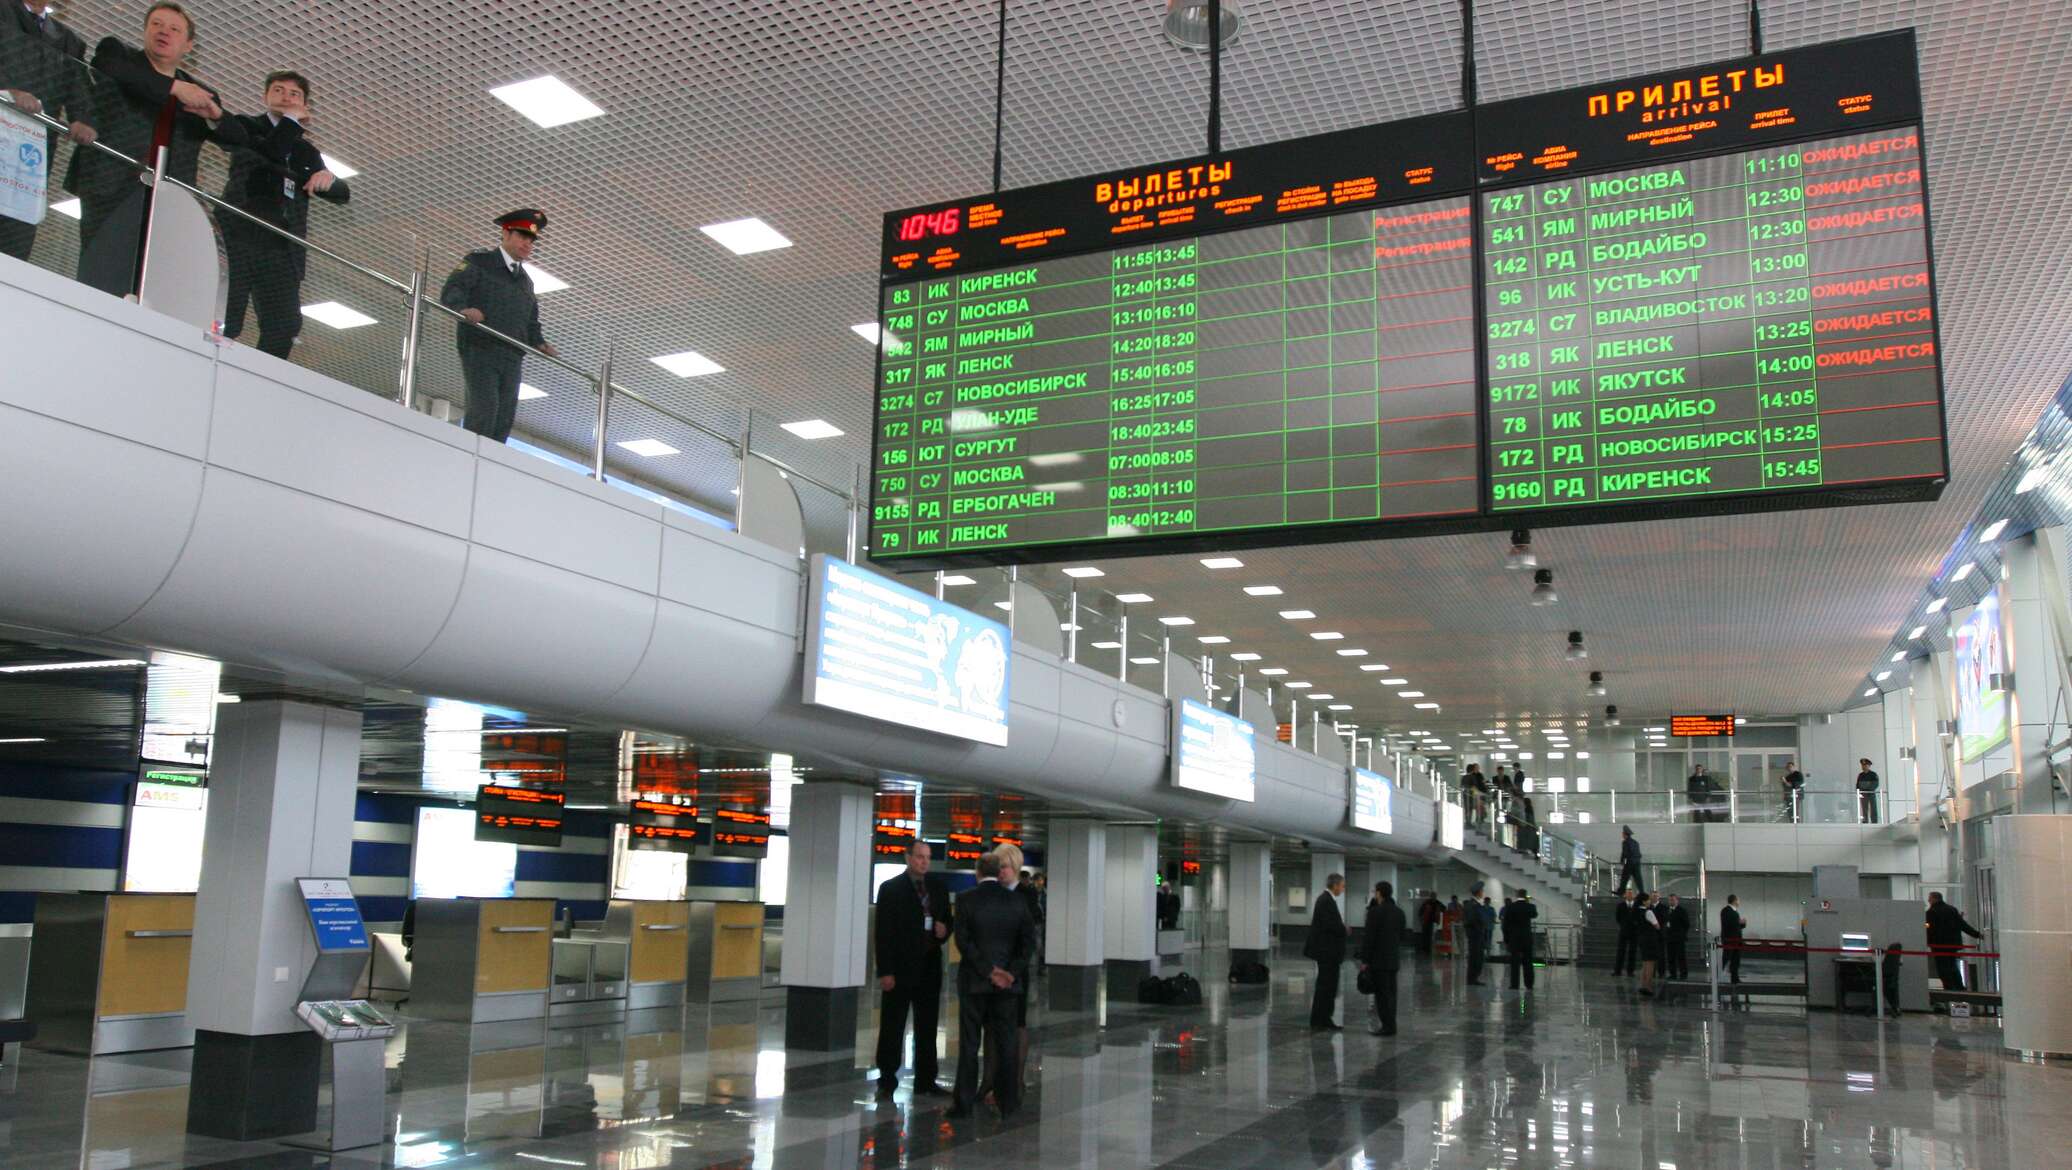 Табло прилета международного аэропорта иркутска